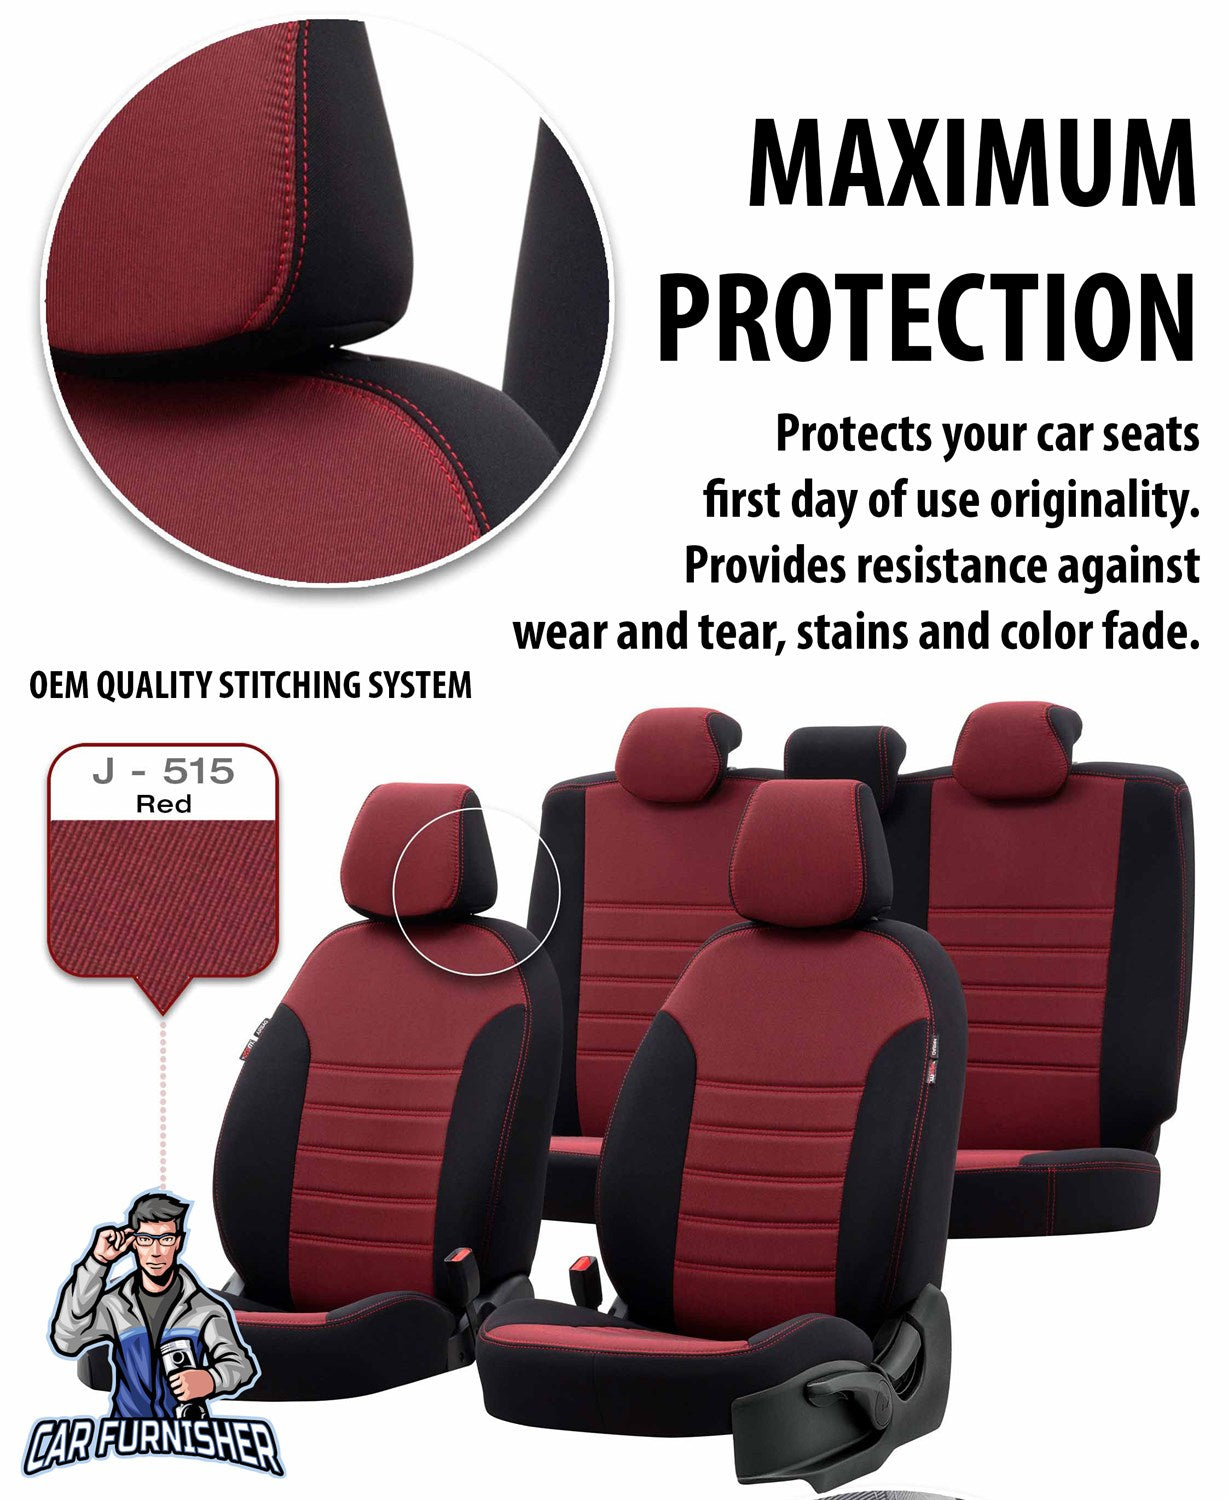 Mitsubishi Spacestar Seat Cover Original Jacquard Design Dark Beige Jacquard Fabric